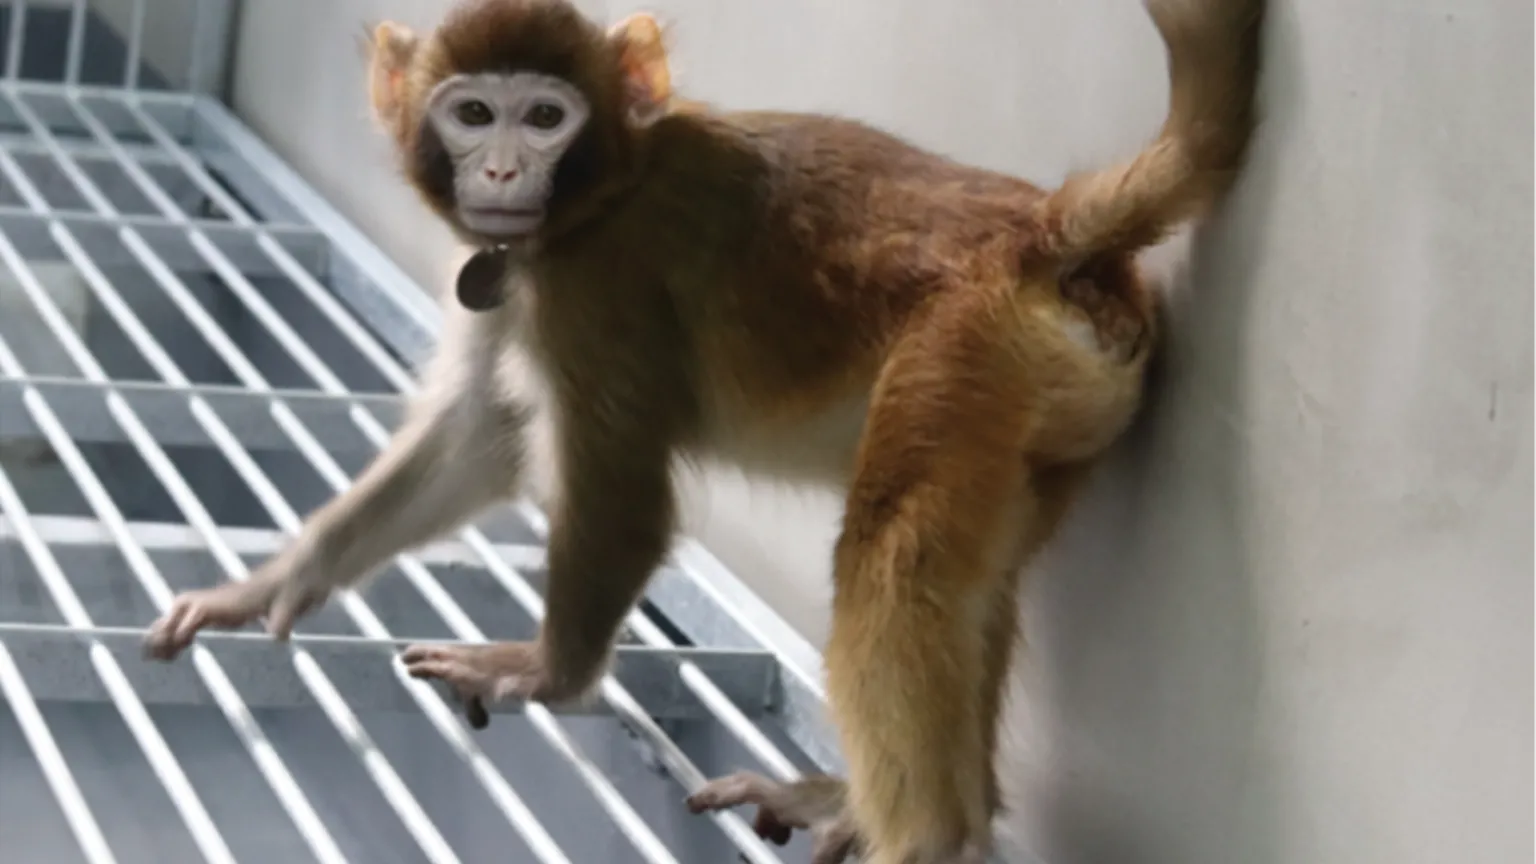 Rhesus monkey on bars in a large enclosure